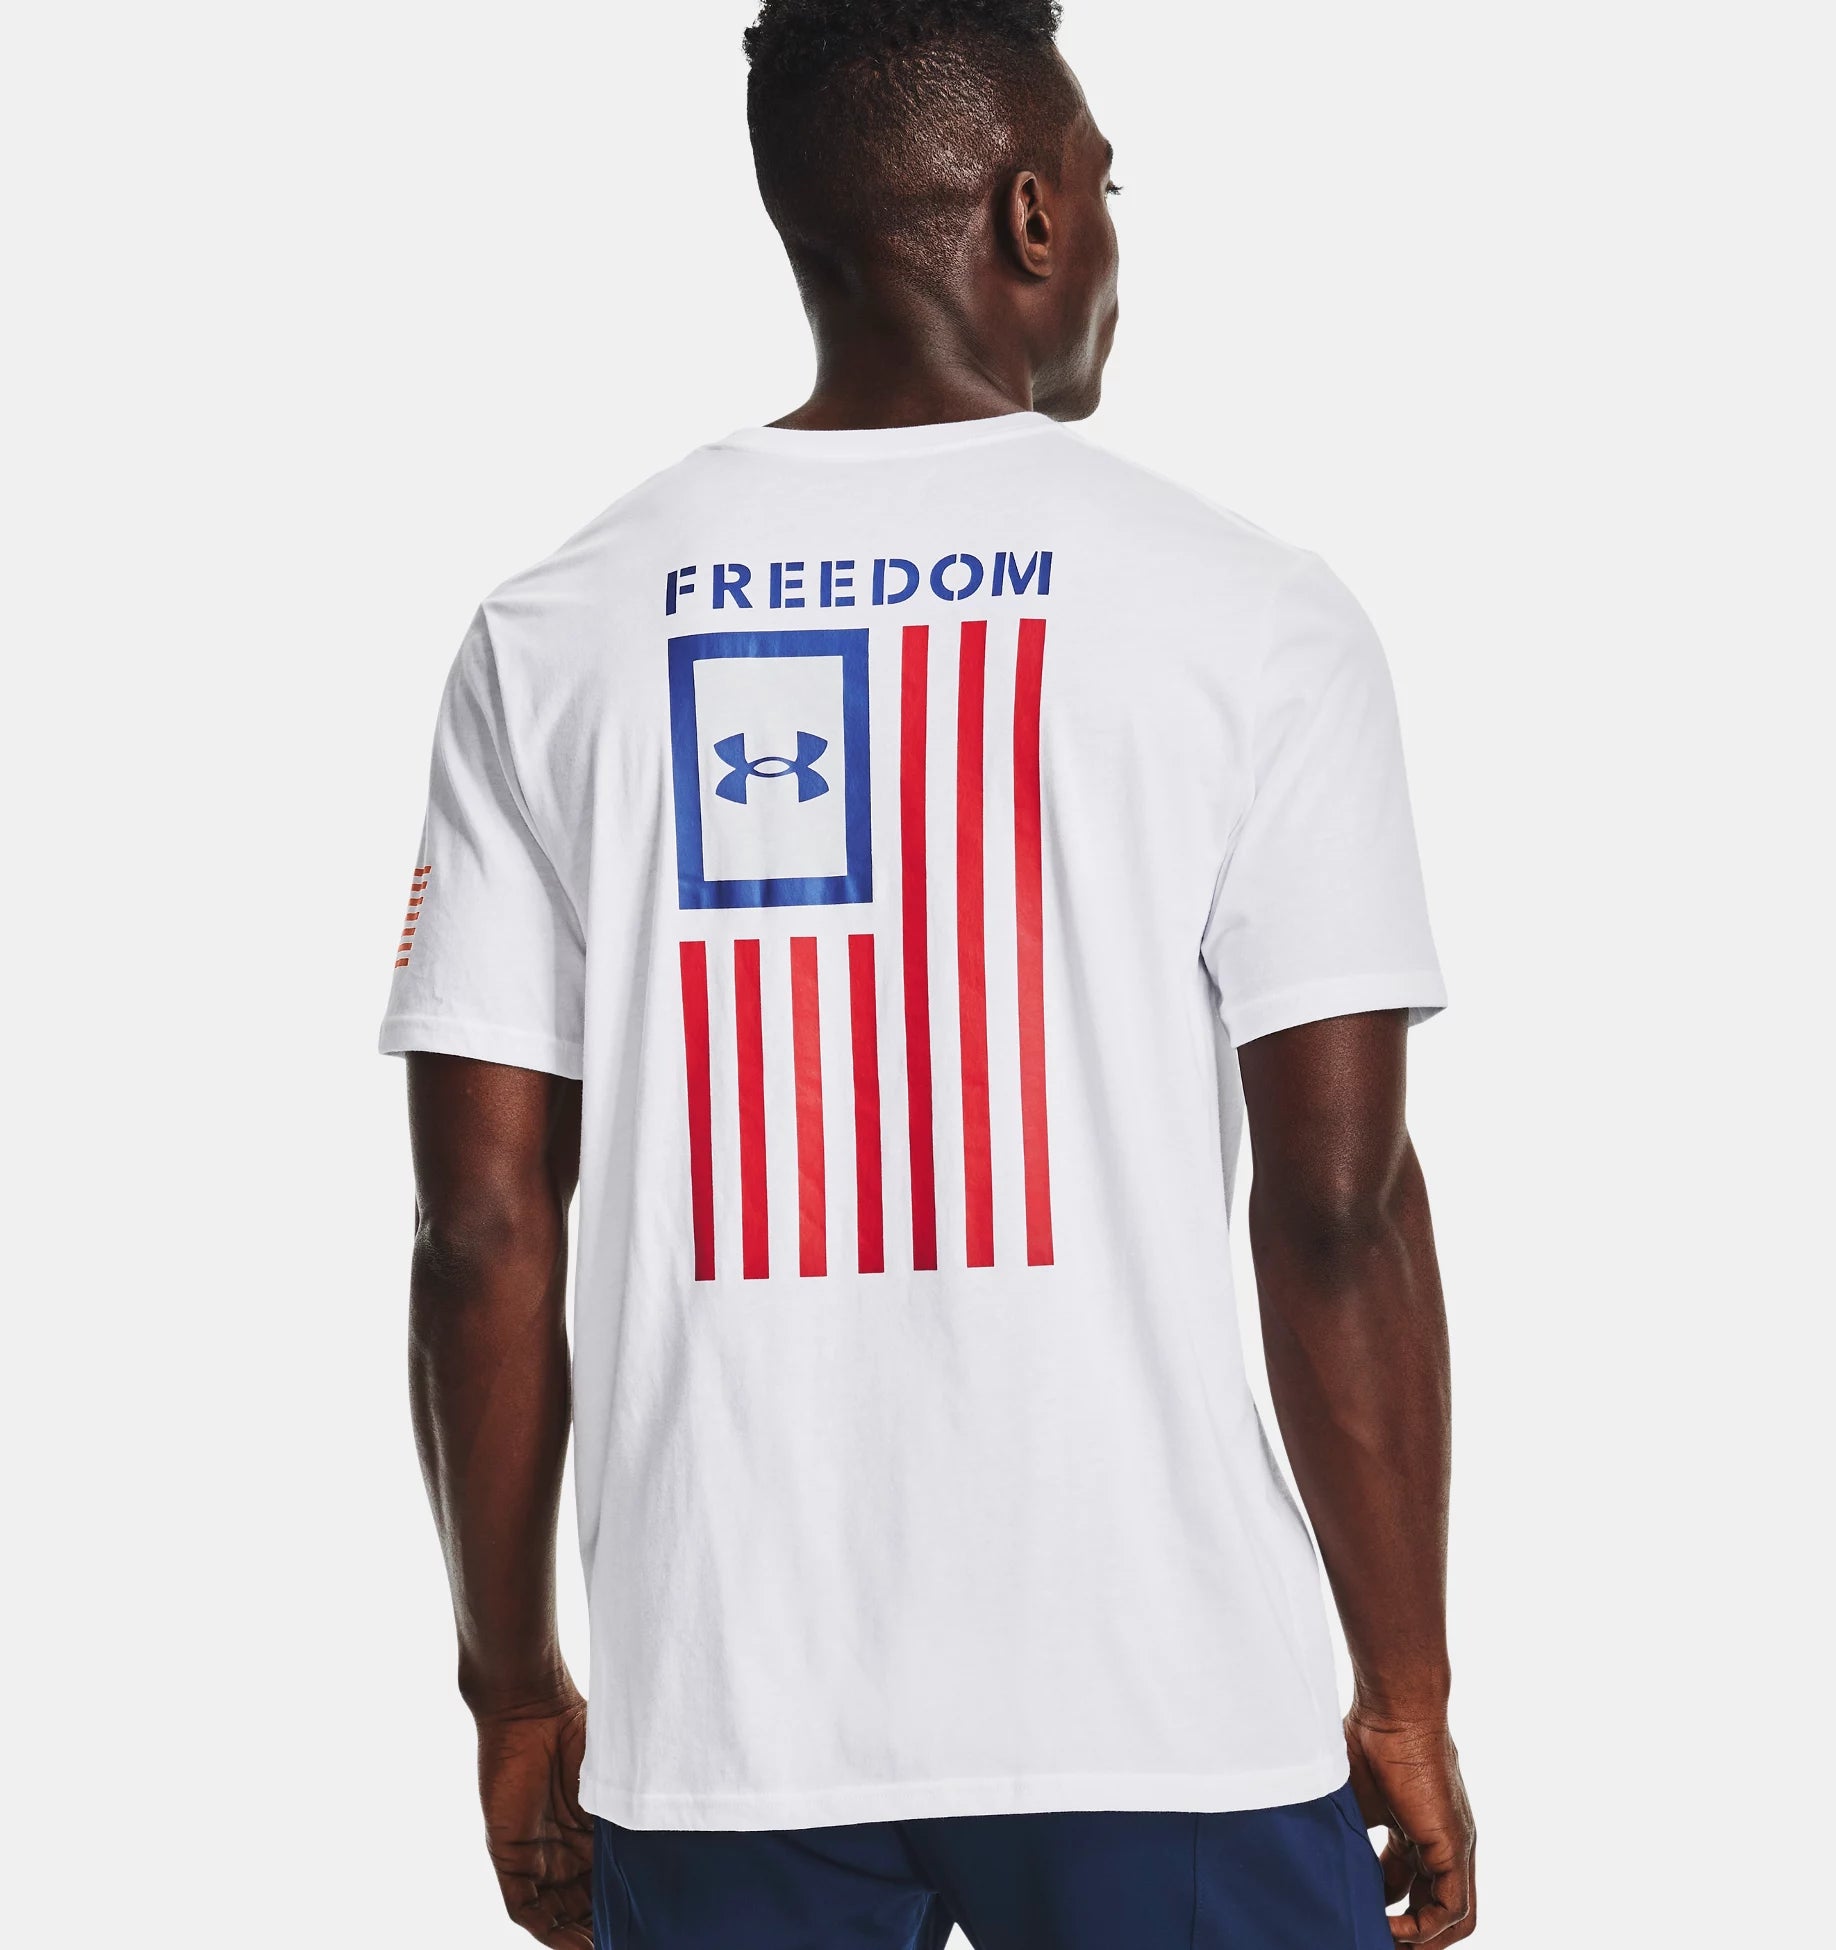 Under Armour Freedom Flag T-Shirt 1370810 – White/Blue, 5XL -